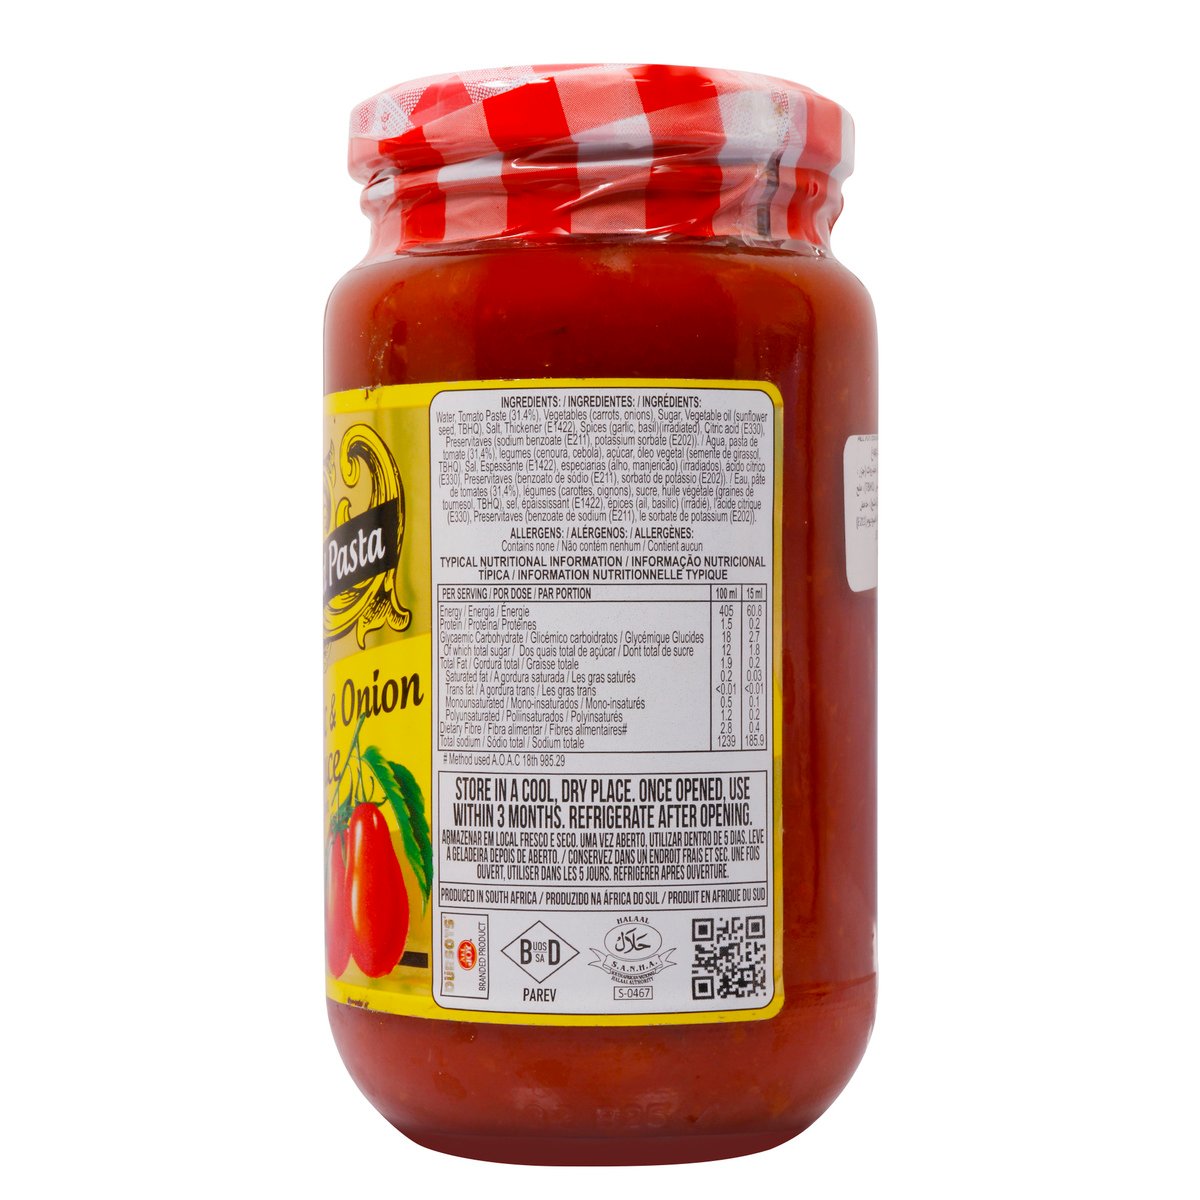 All Joy Pasta Sauce Extra Garlic & Onion 440g